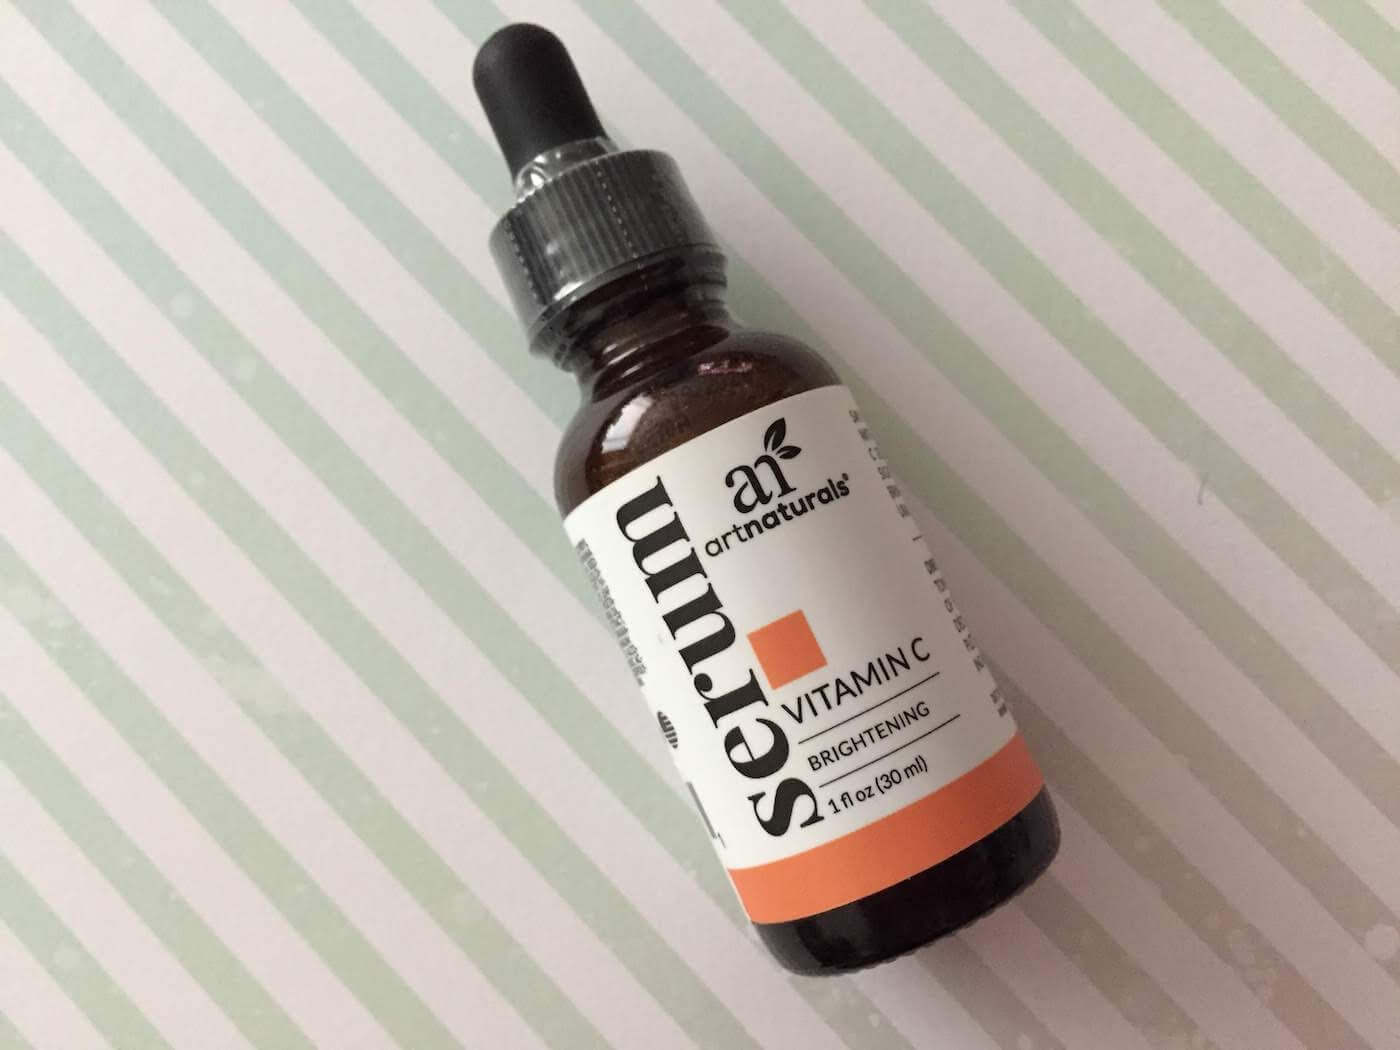 artnaturals Vitamin C Serum: A worthy alternative to SkinCeuticals C E  Ferulic Serum?